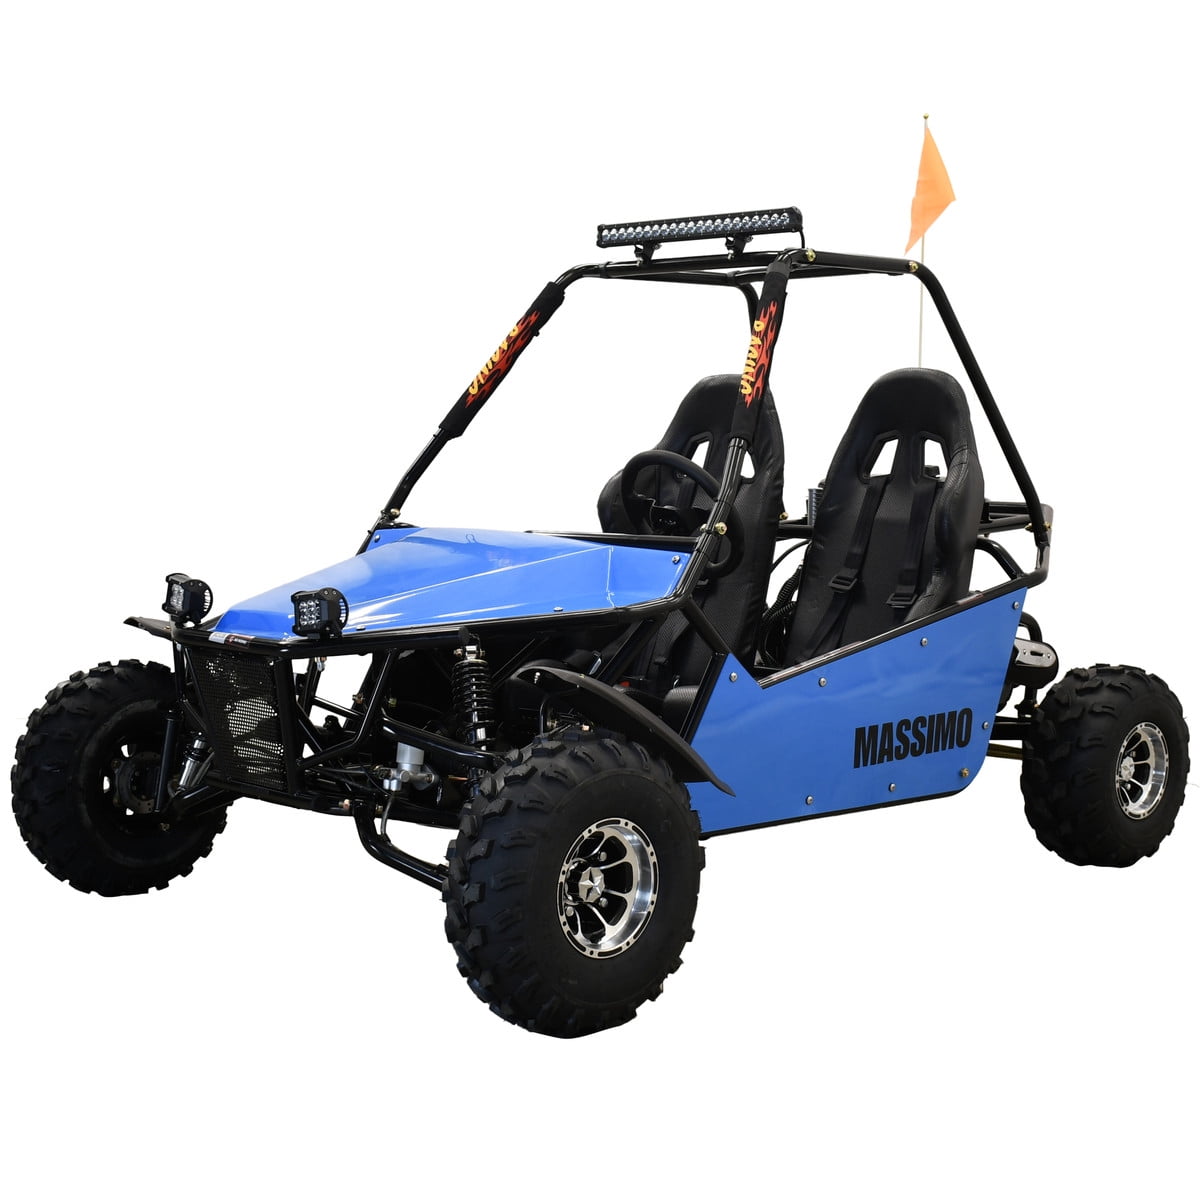 Massimo GKM 200|4 Stroke 177cc 2WD Go Kart (Blue)